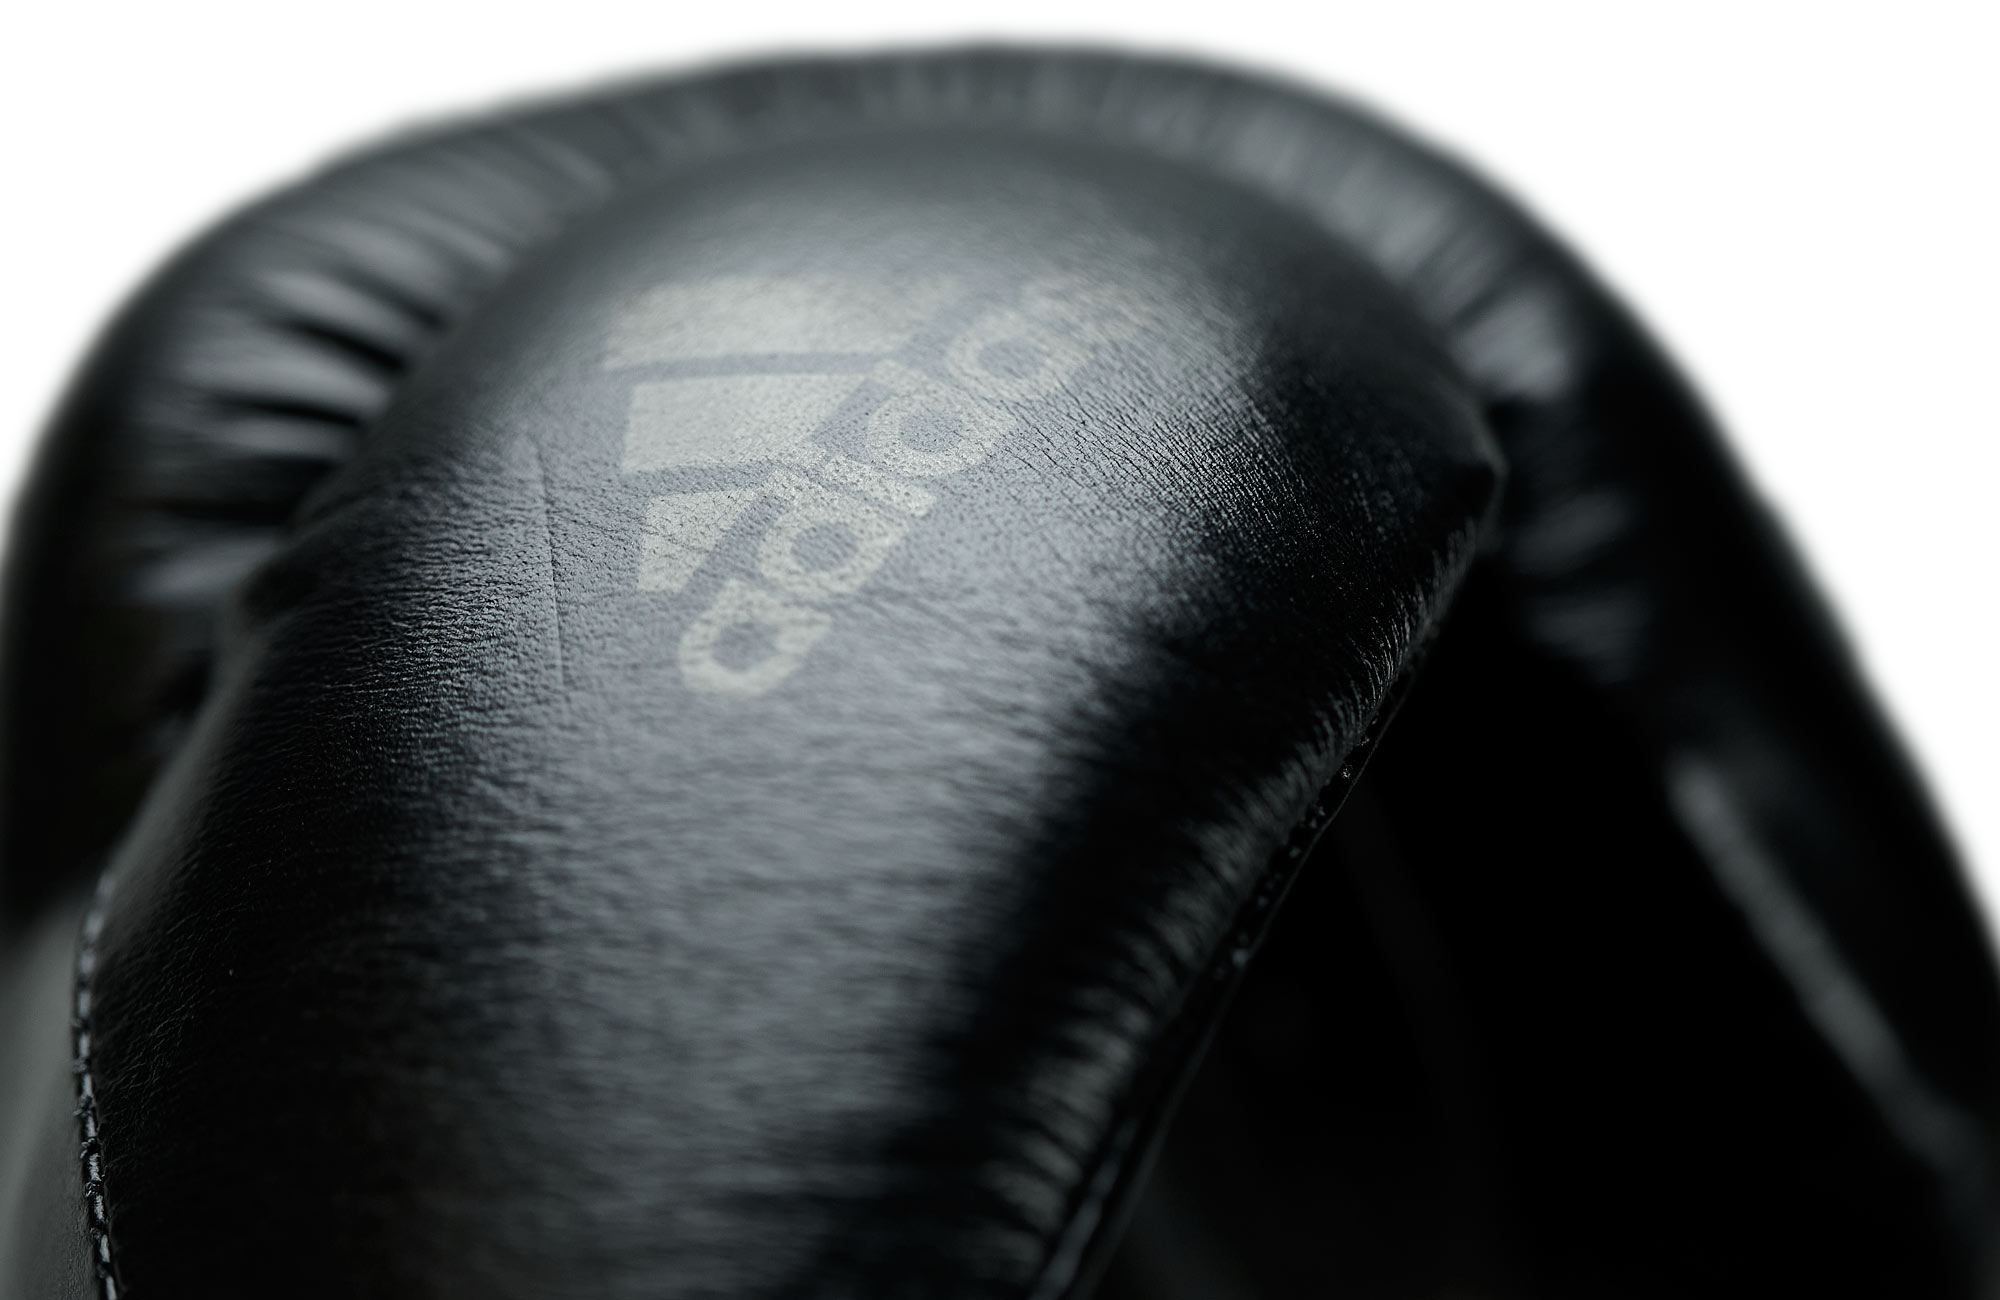  adidas boxing glove Speed 175 adiSBG175 2.0, black/white